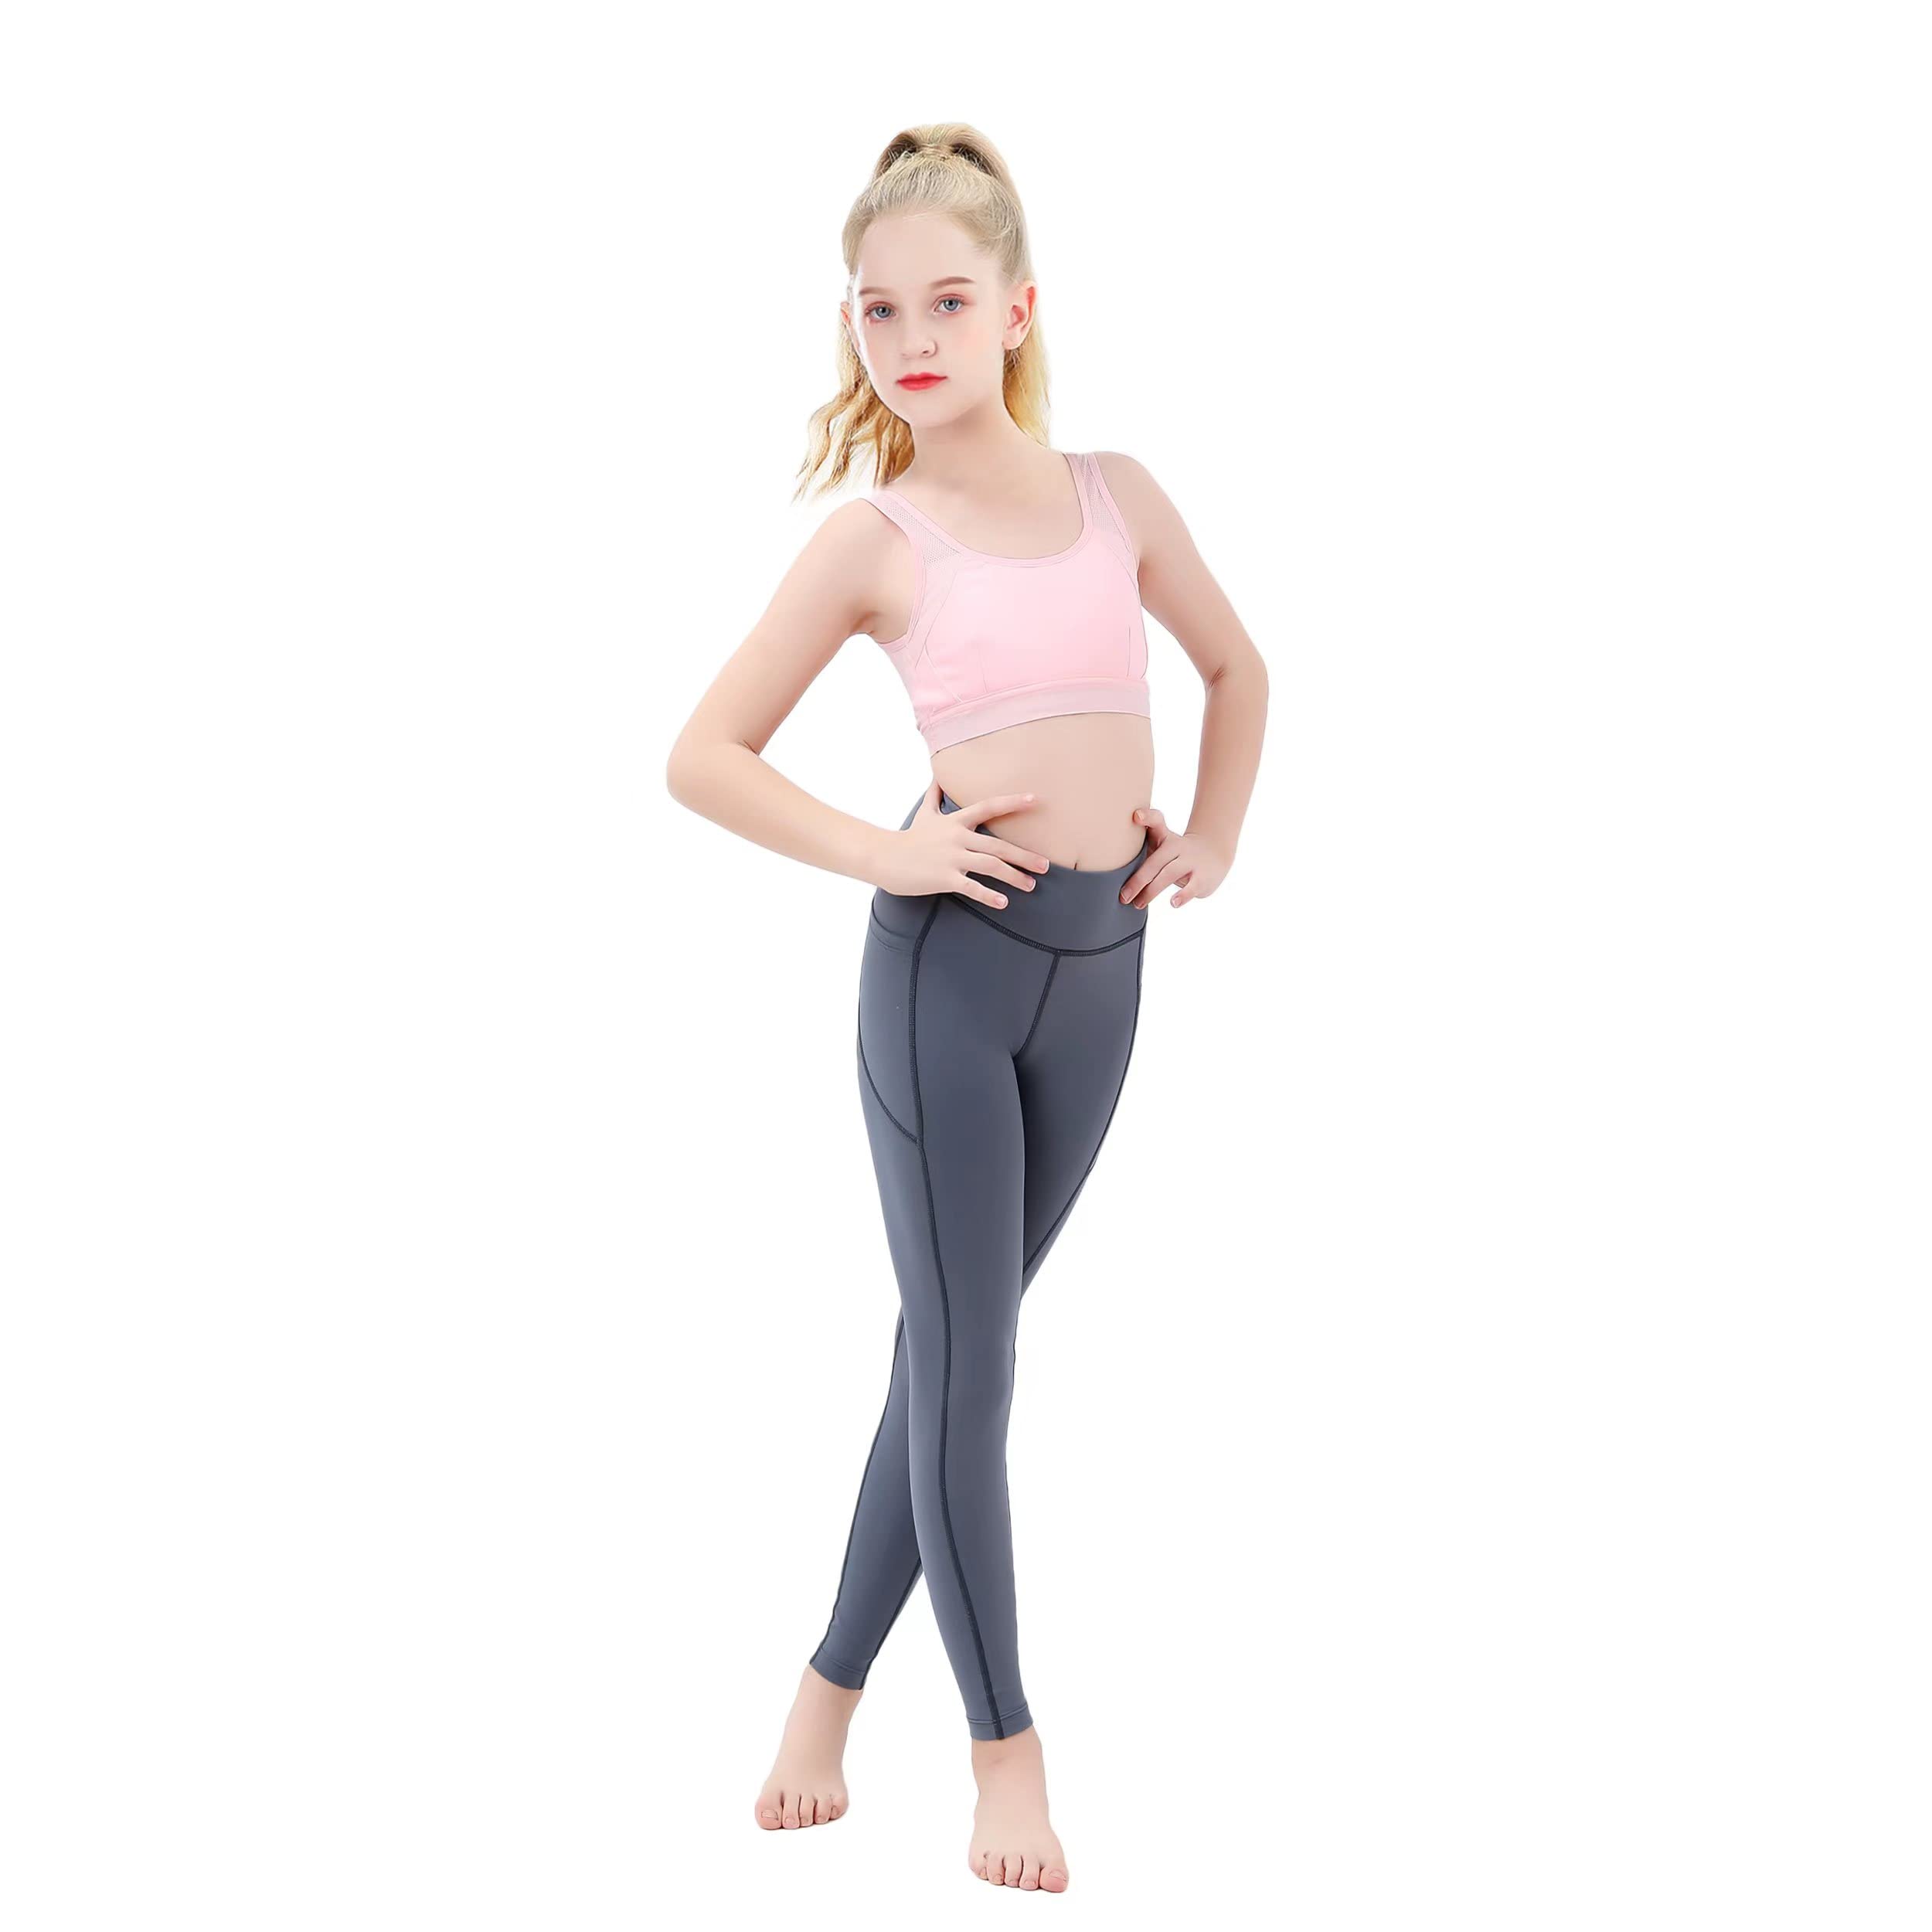 JIM LEAGUE Girls Athletic Dance Leggings - Kids Yoga Compression Pants Teen  Running Workout Sport Tights Leggins with Pockets Grey Medium